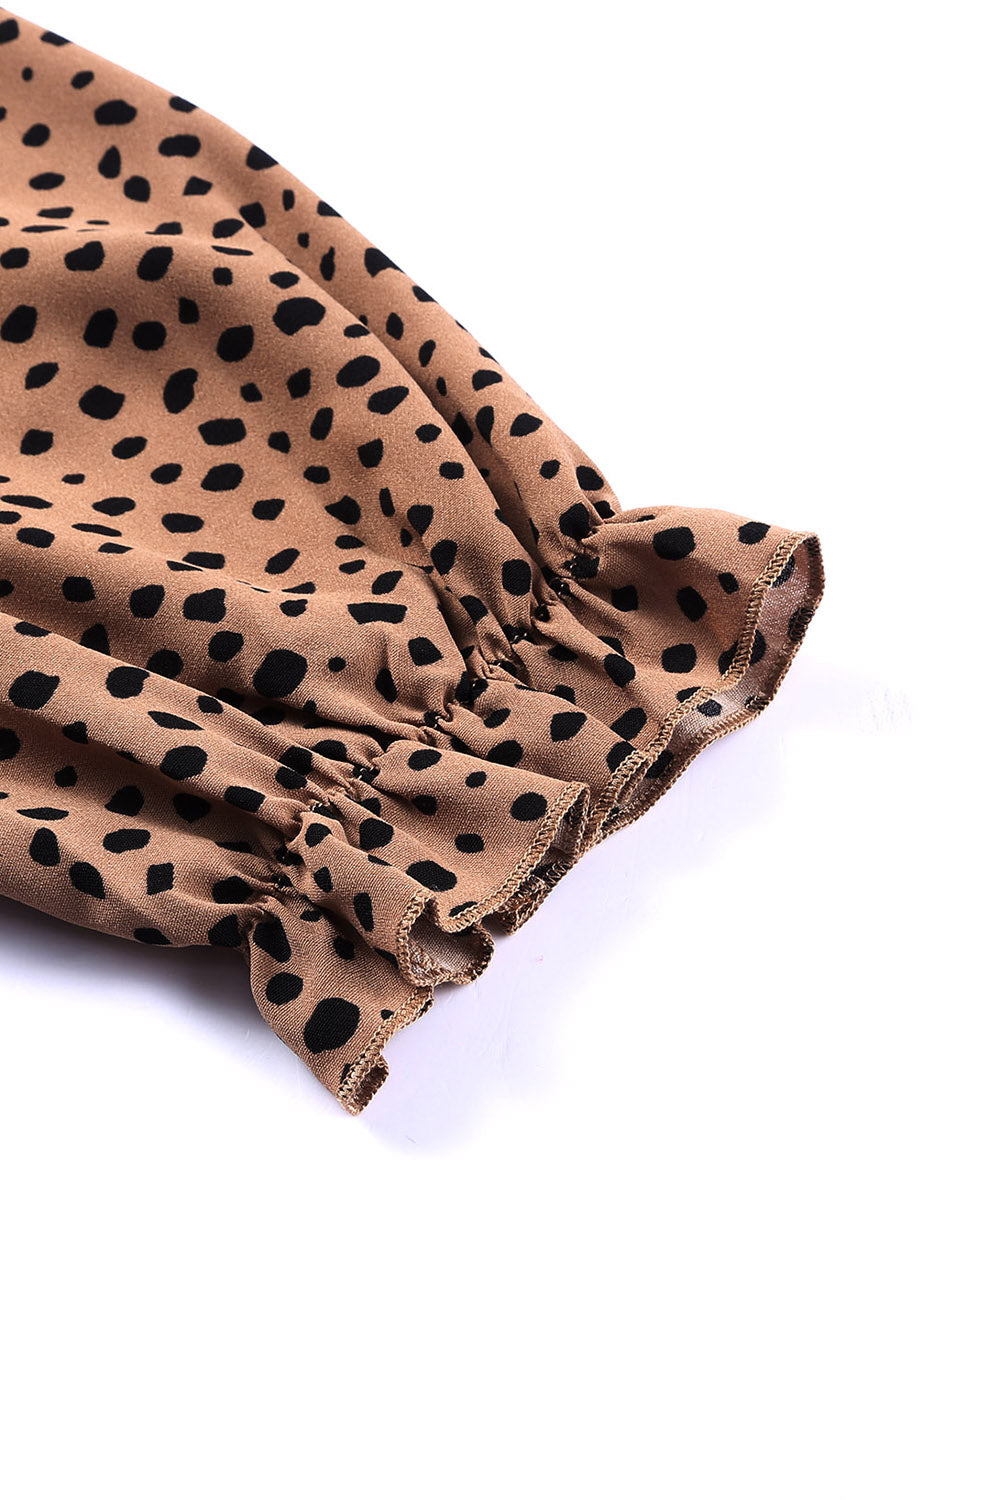 Stylish Animal Print Top with Ruffled Collar and Flouncy Sleeves